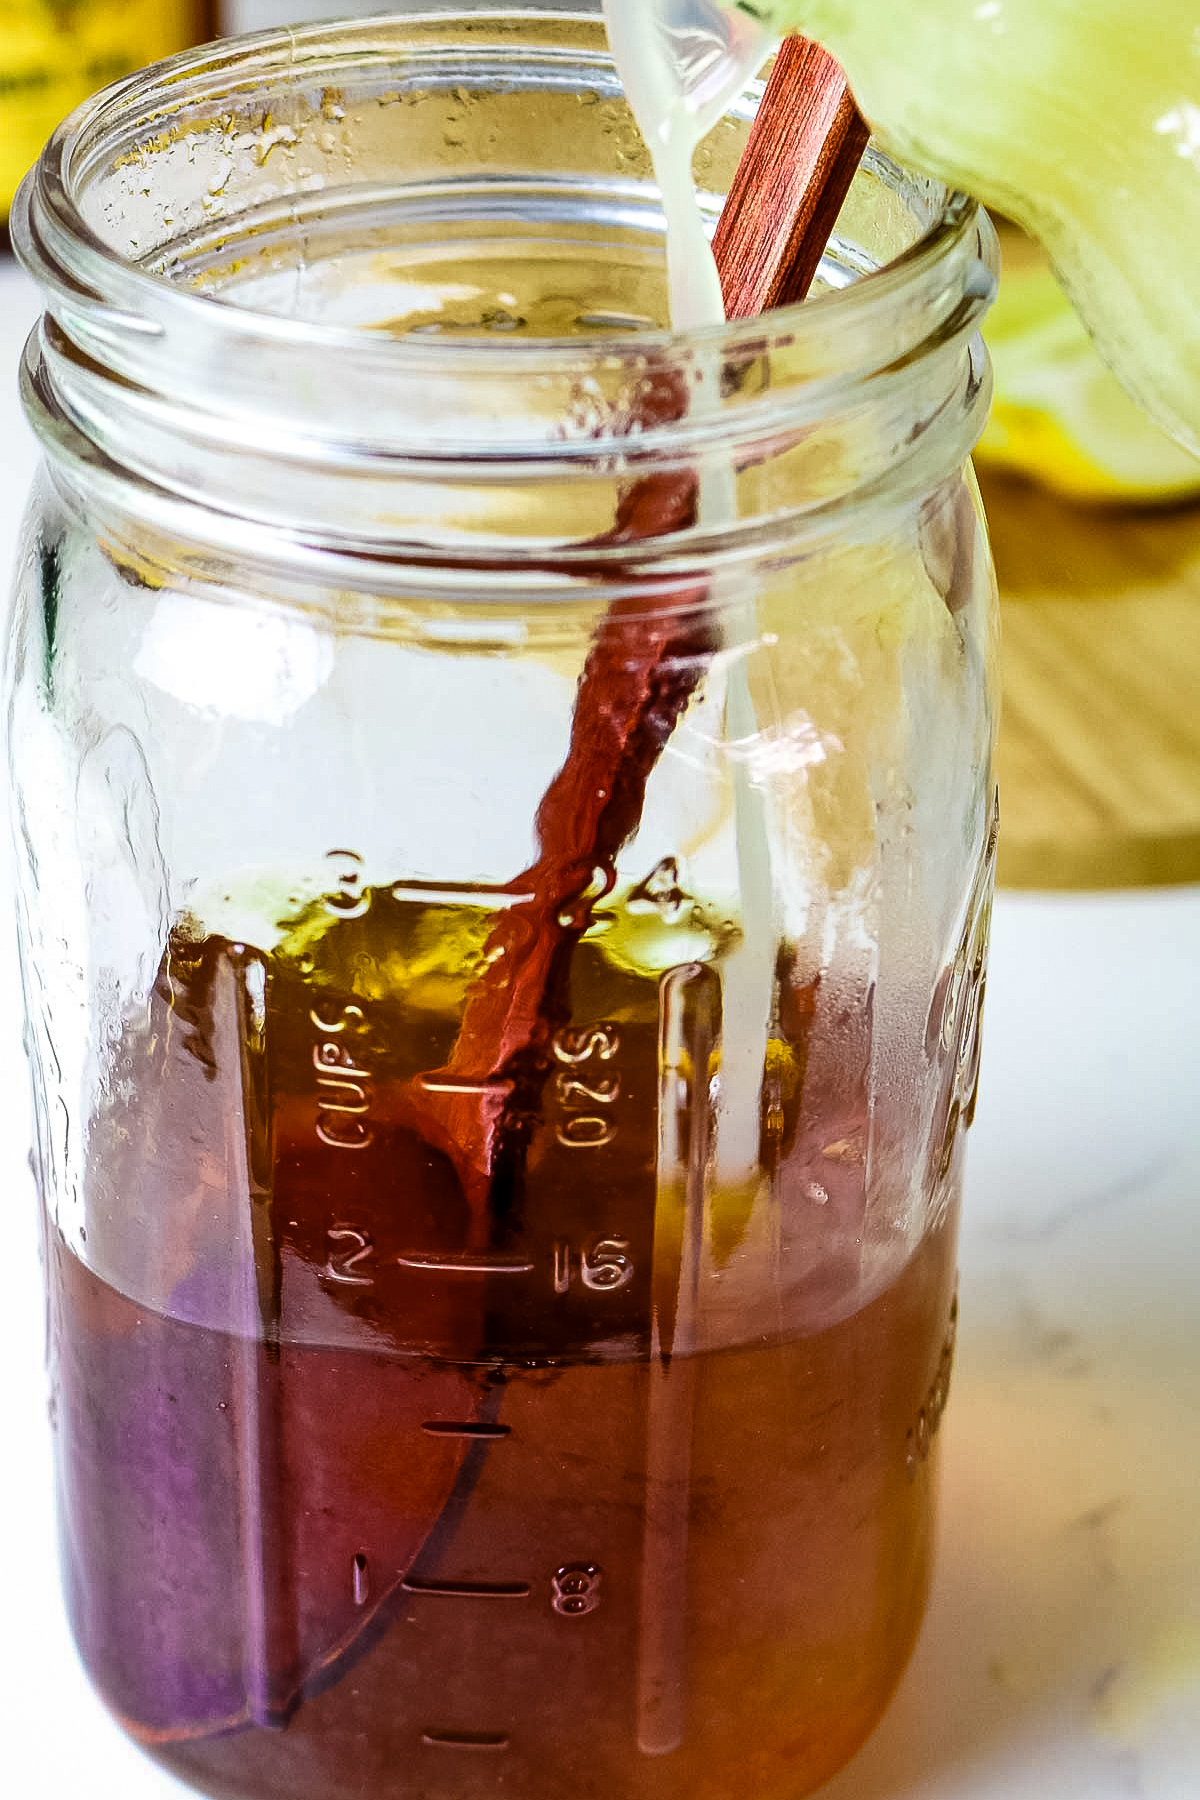 honey juice is added to brewed herbal tea in a mason jar.